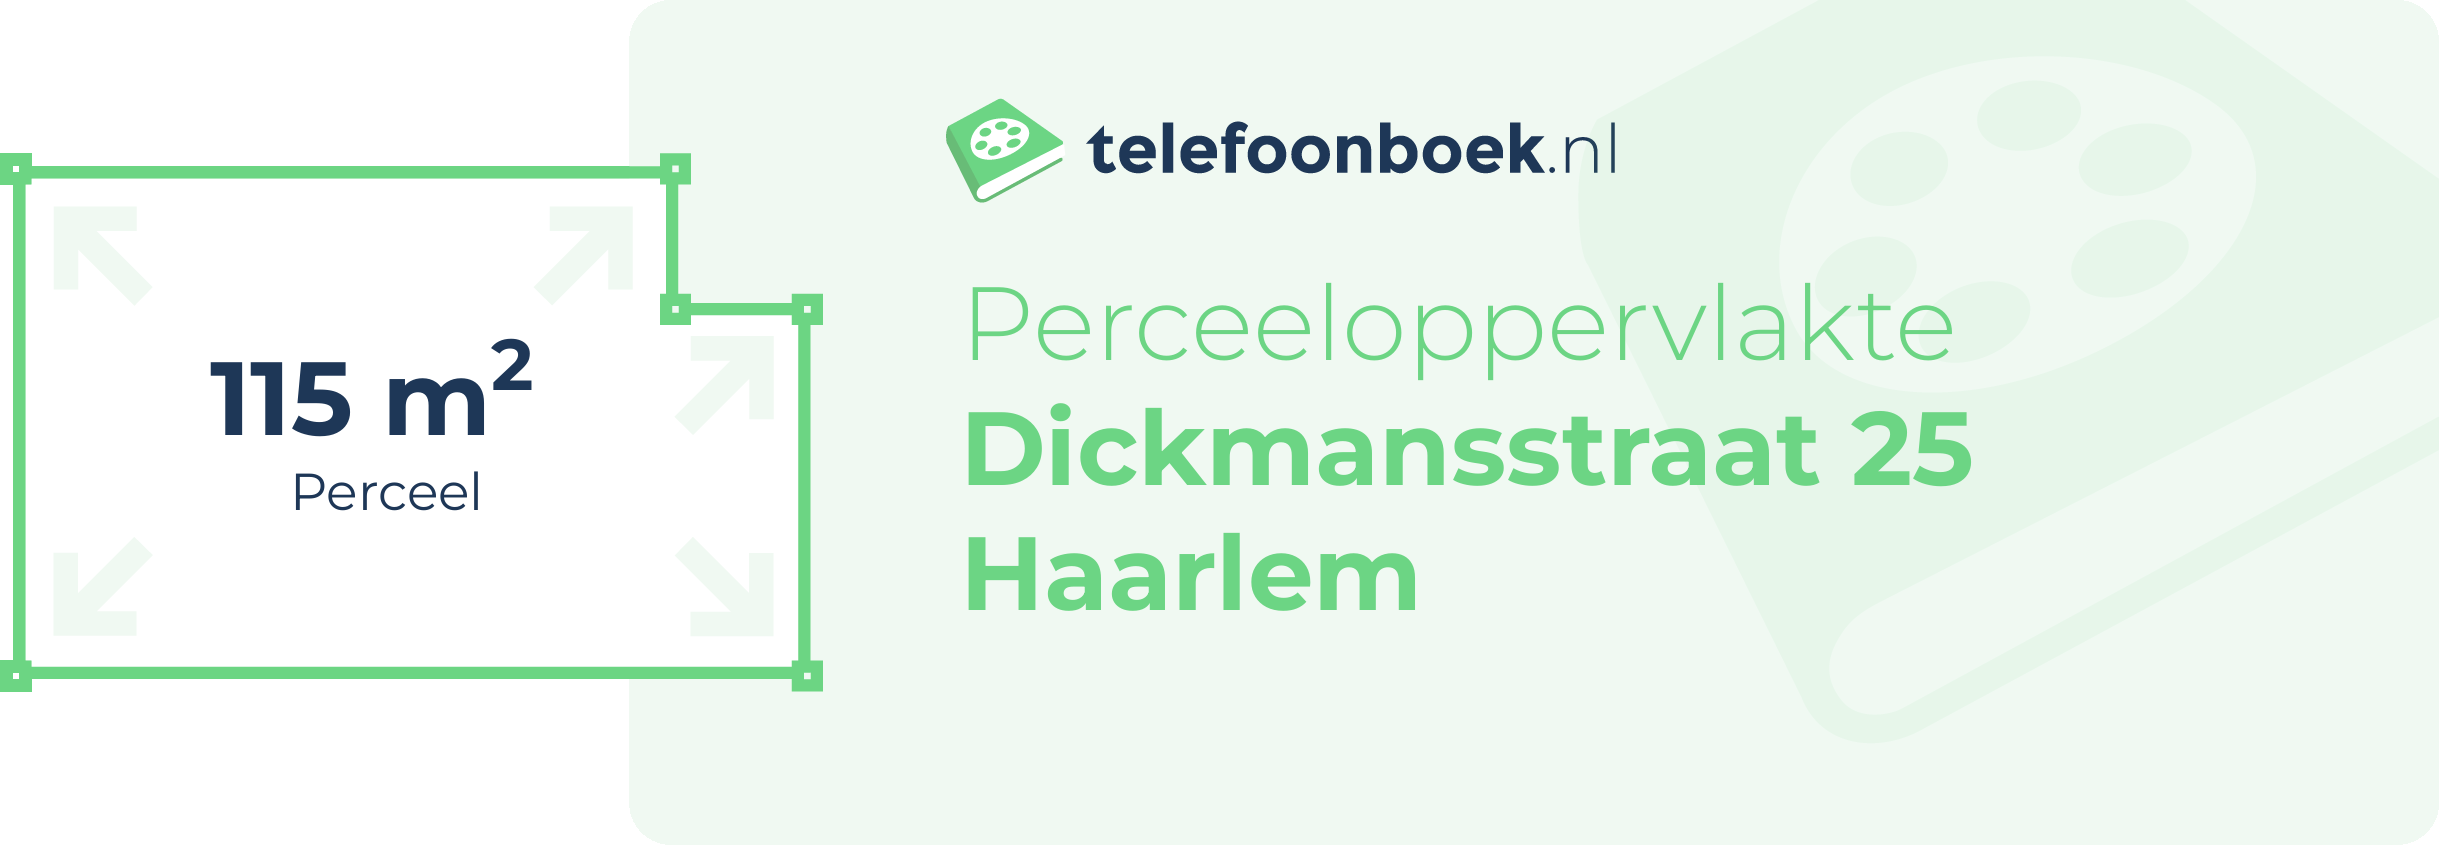 Perceeloppervlakte Dickmansstraat 25 Haarlem